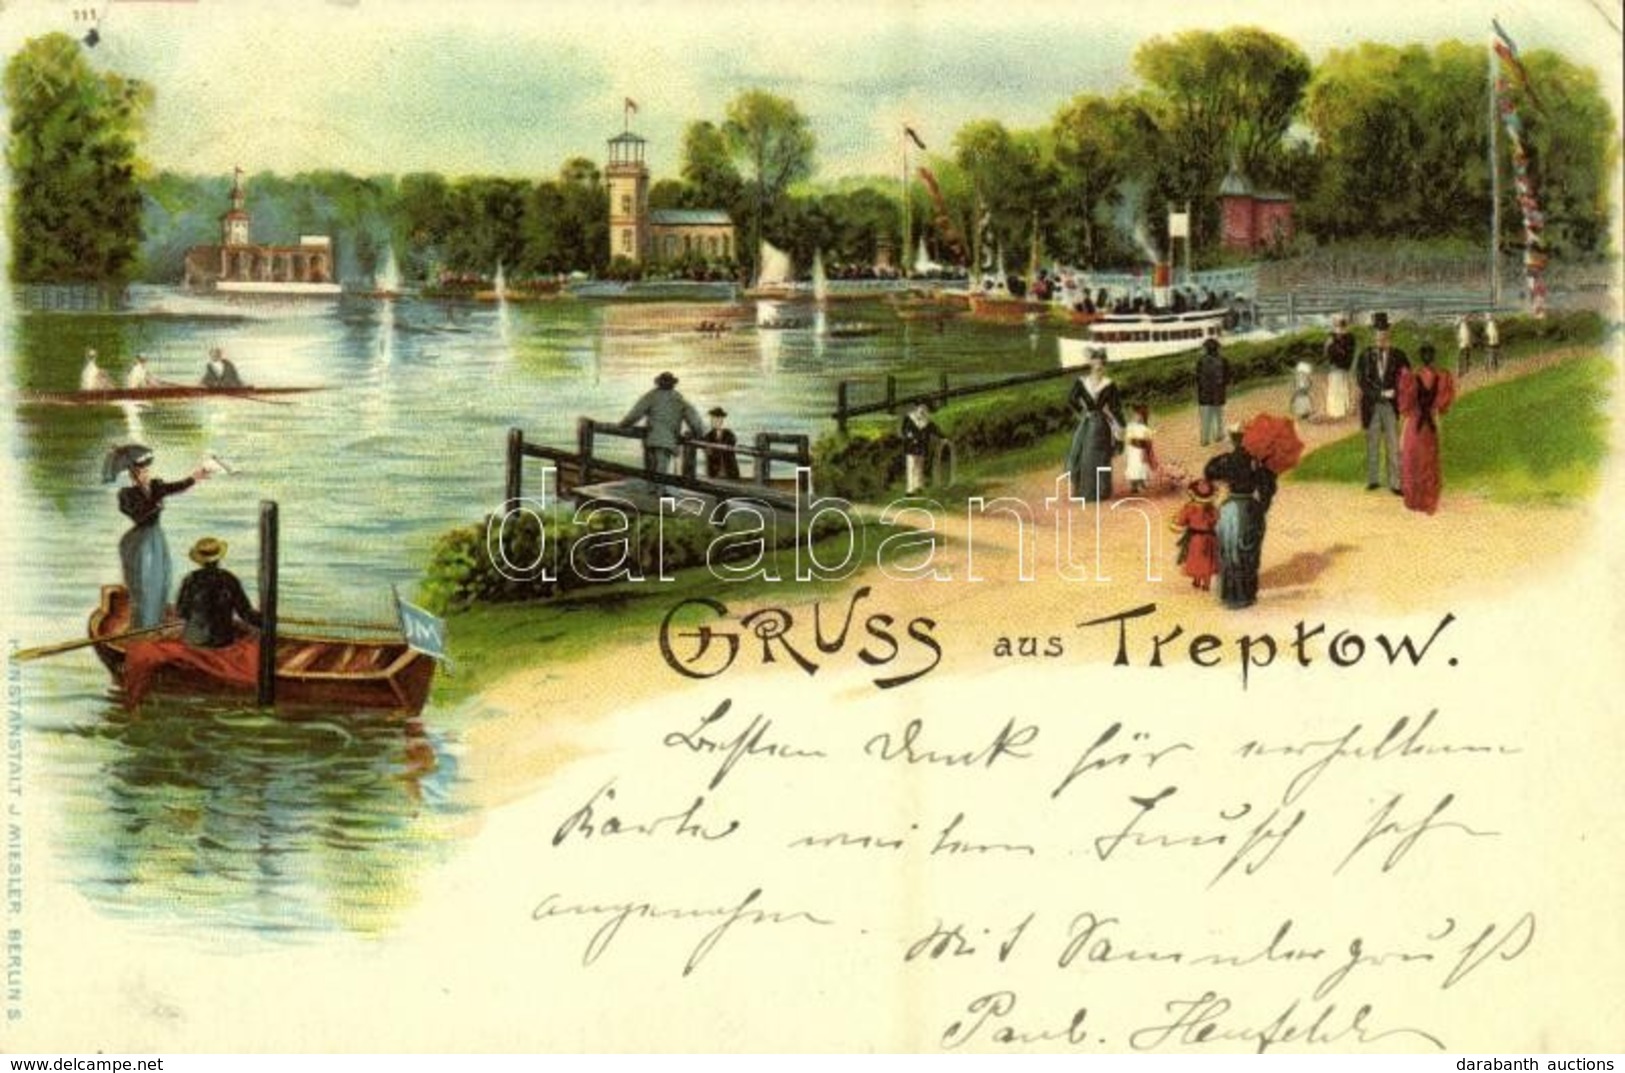 T2/T3 1899 Berlin, Treptow Paradies Garten / Park, Rowing Boats, Steamship. Kunstanstalt J. Miesler 111. Art Novueau, Li - Ohne Zuordnung